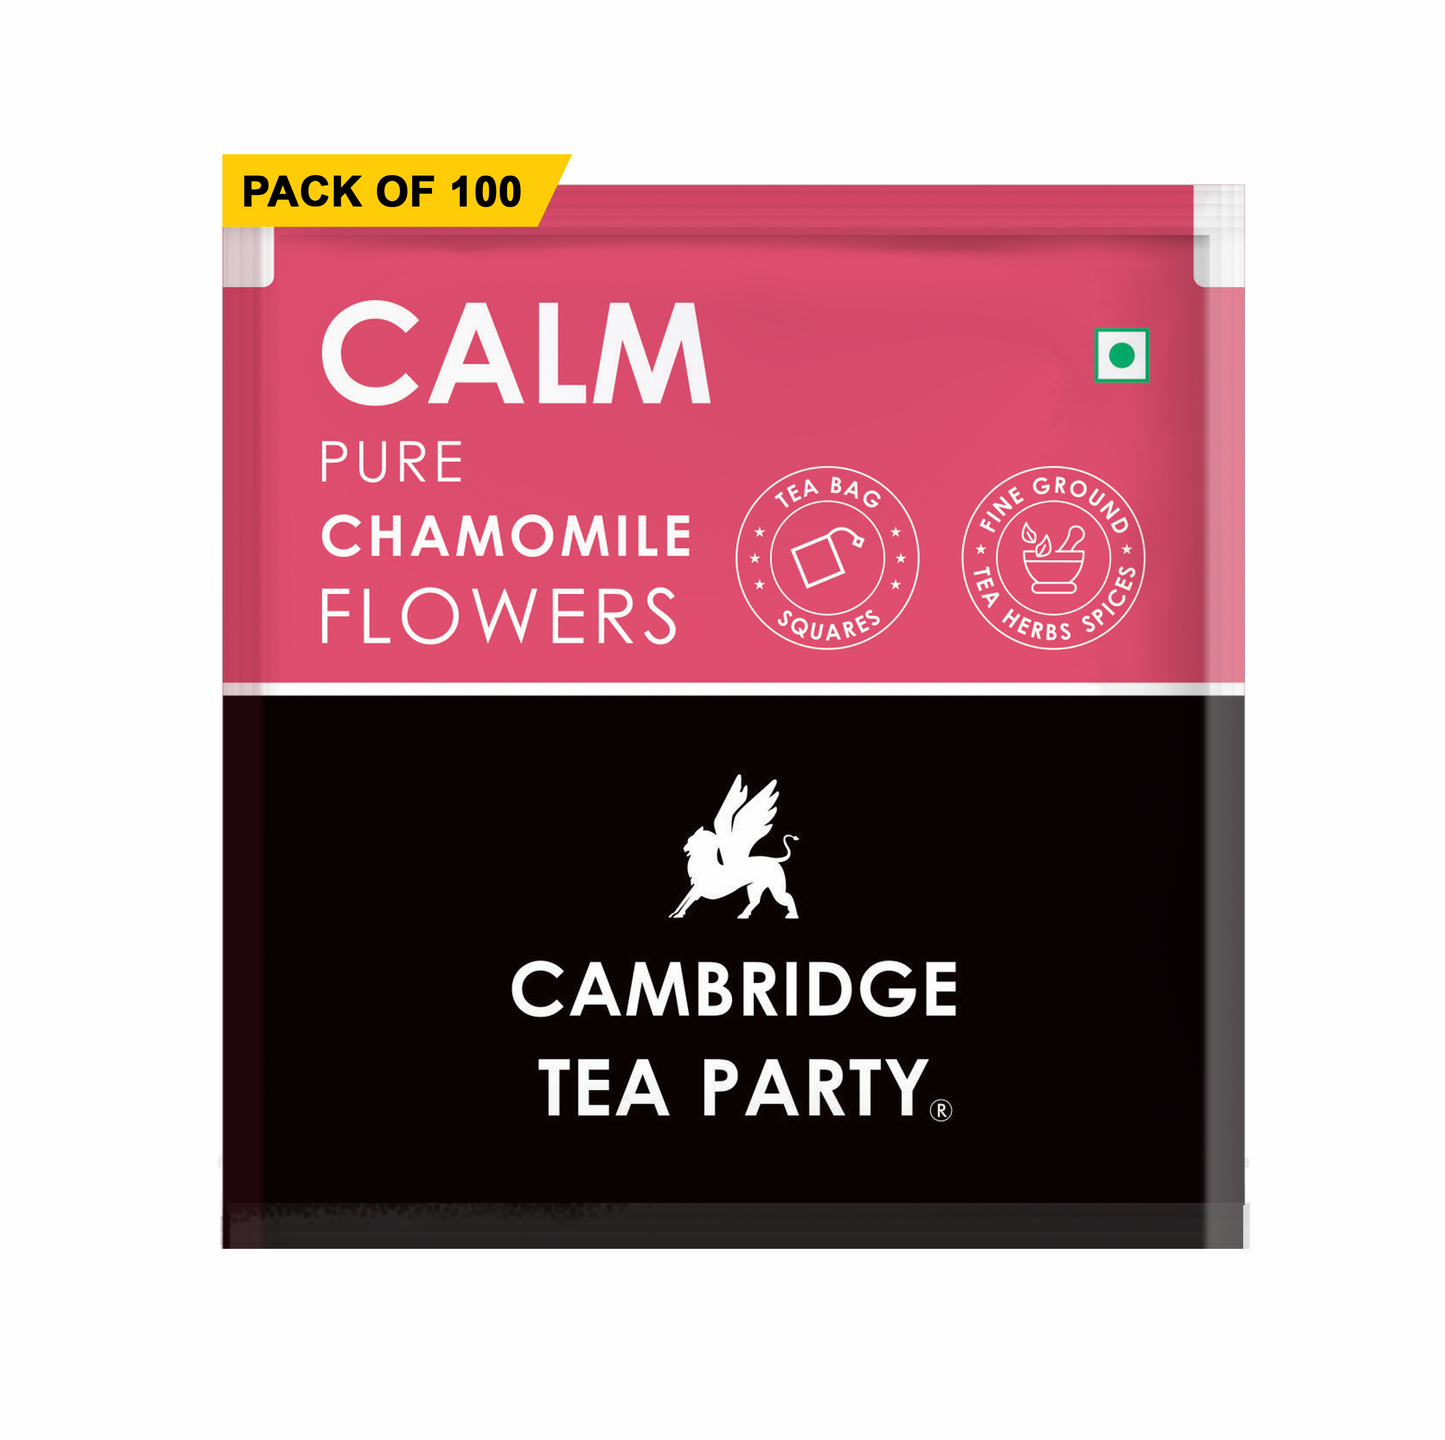 Cambridge Tea Party Calm 30 Tea Bags, Pure Chamomile Flower, Infusion Tea Tisane (sleep, relax, digestion, weight loss, slim) 